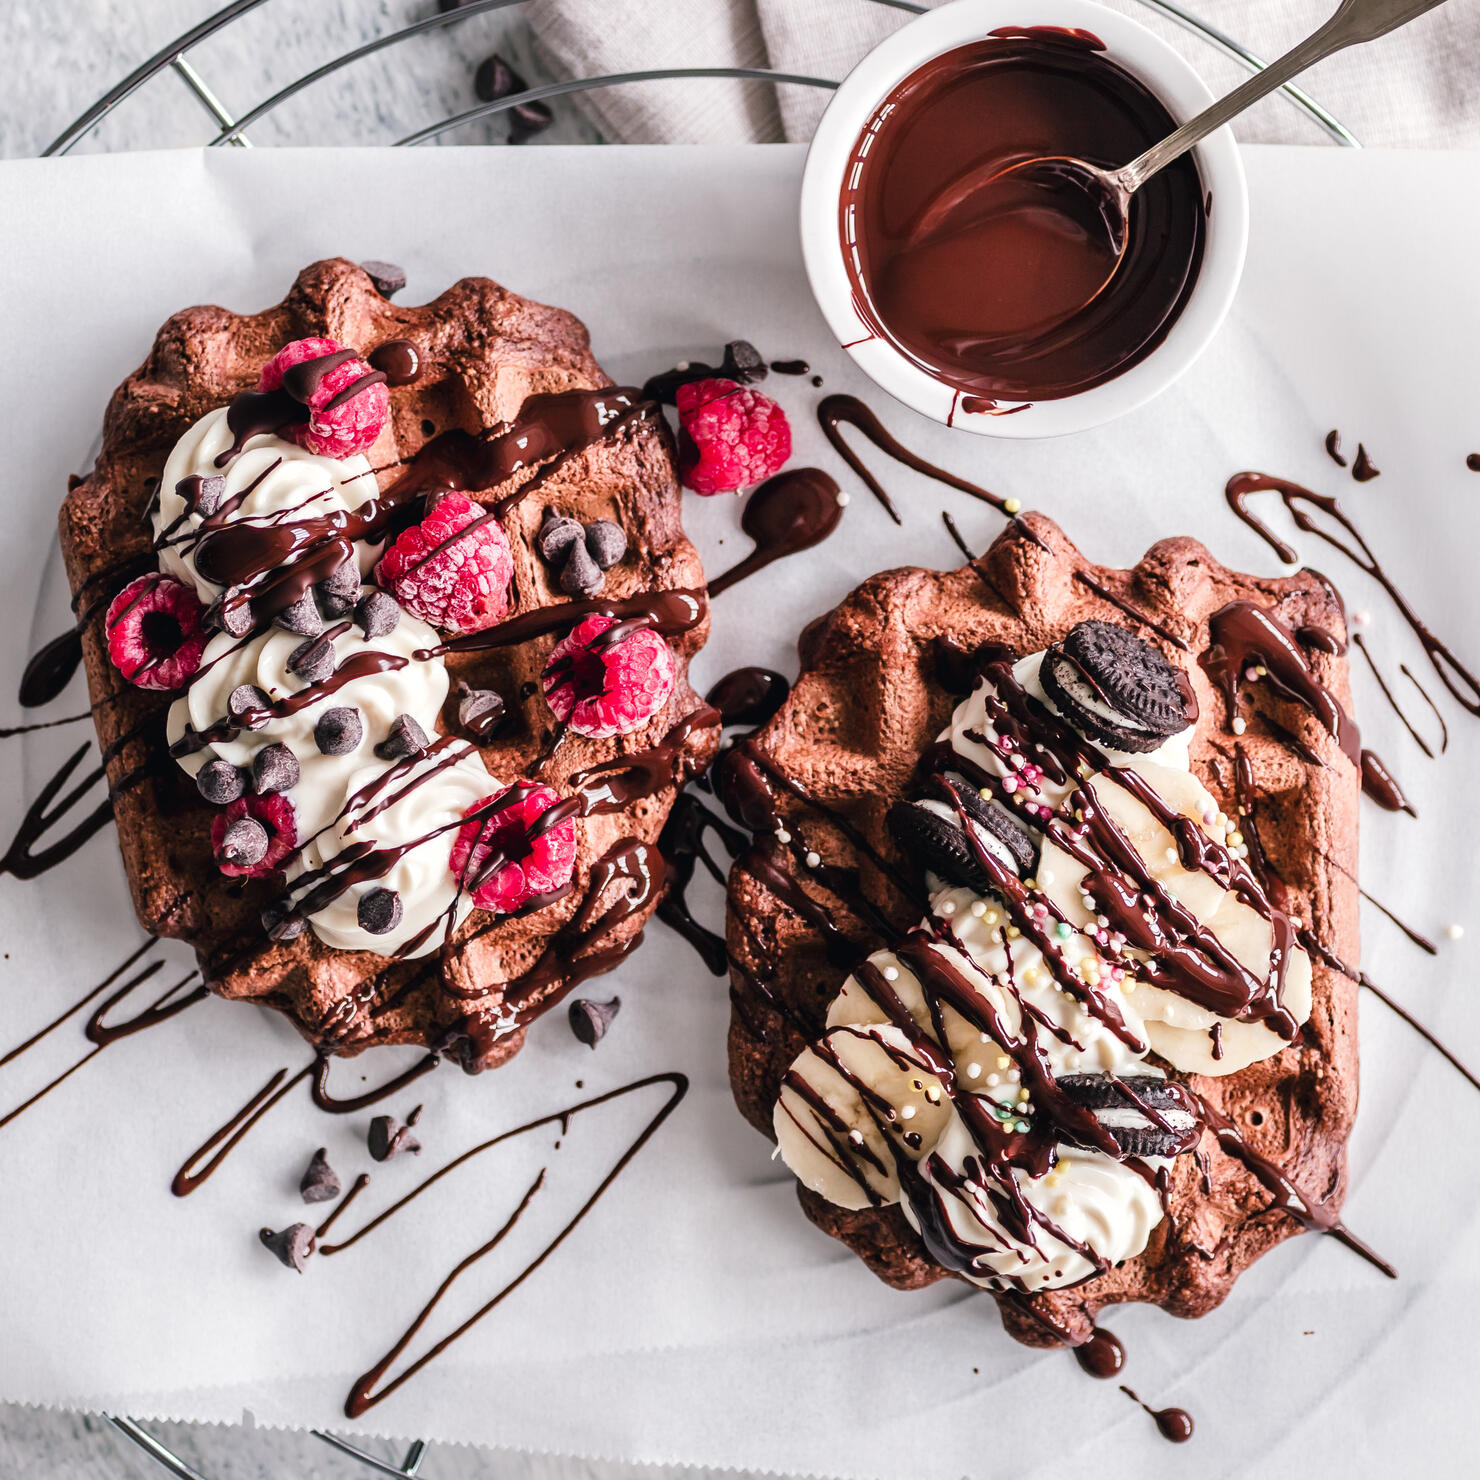 Chocolate waffles with cream, chocolate sauce, fruit and chocolate sandwich cookies